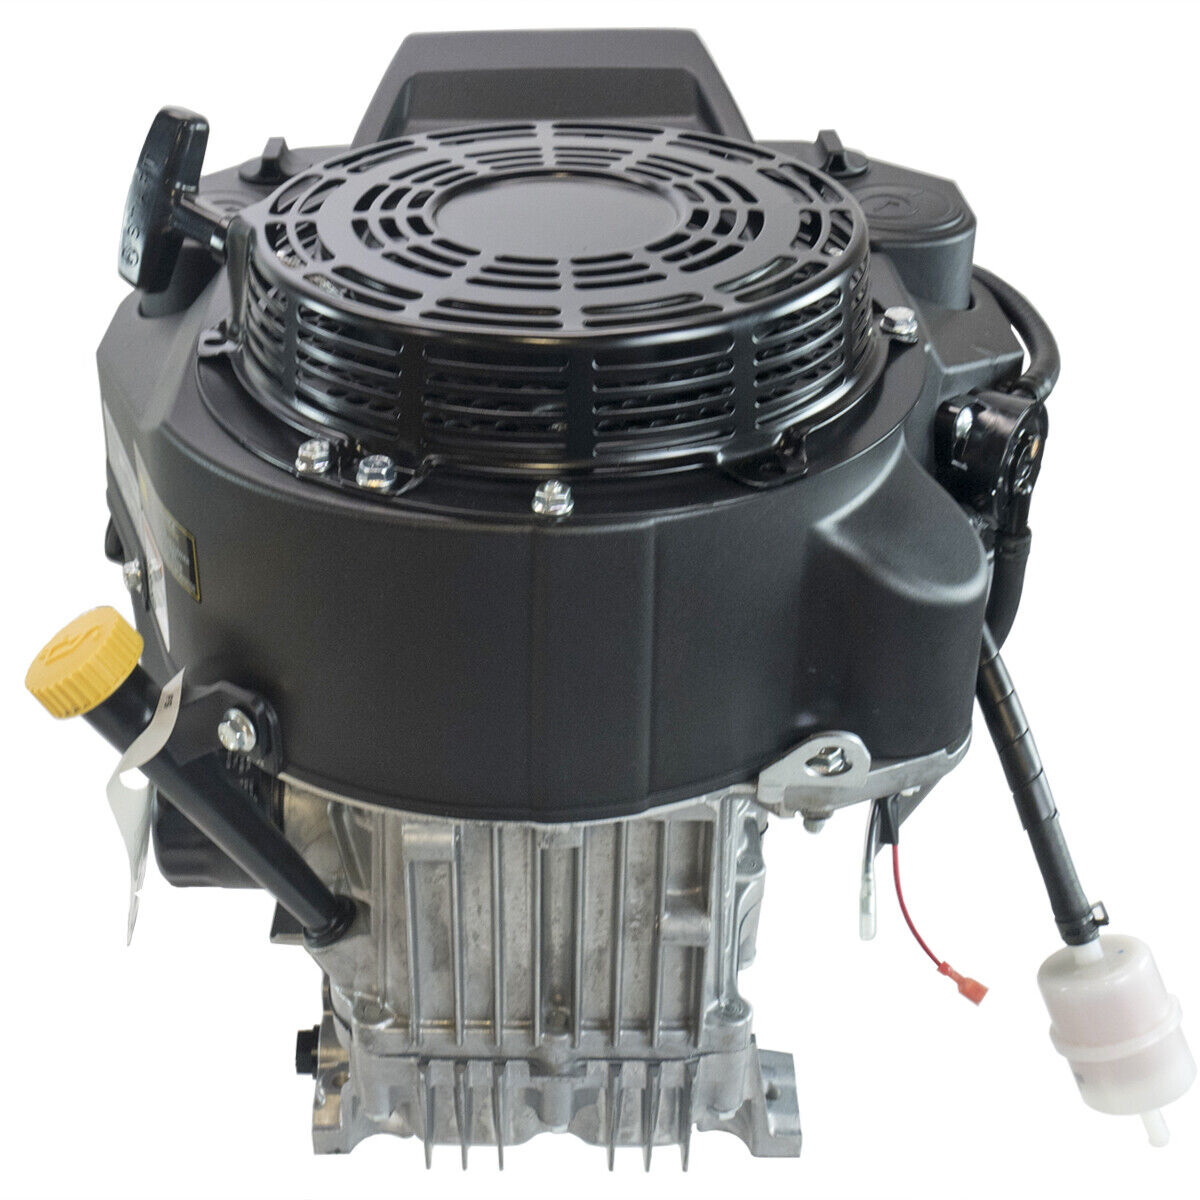 Kawasaki 18.5HP Replacement Engine #FS600VGS01S